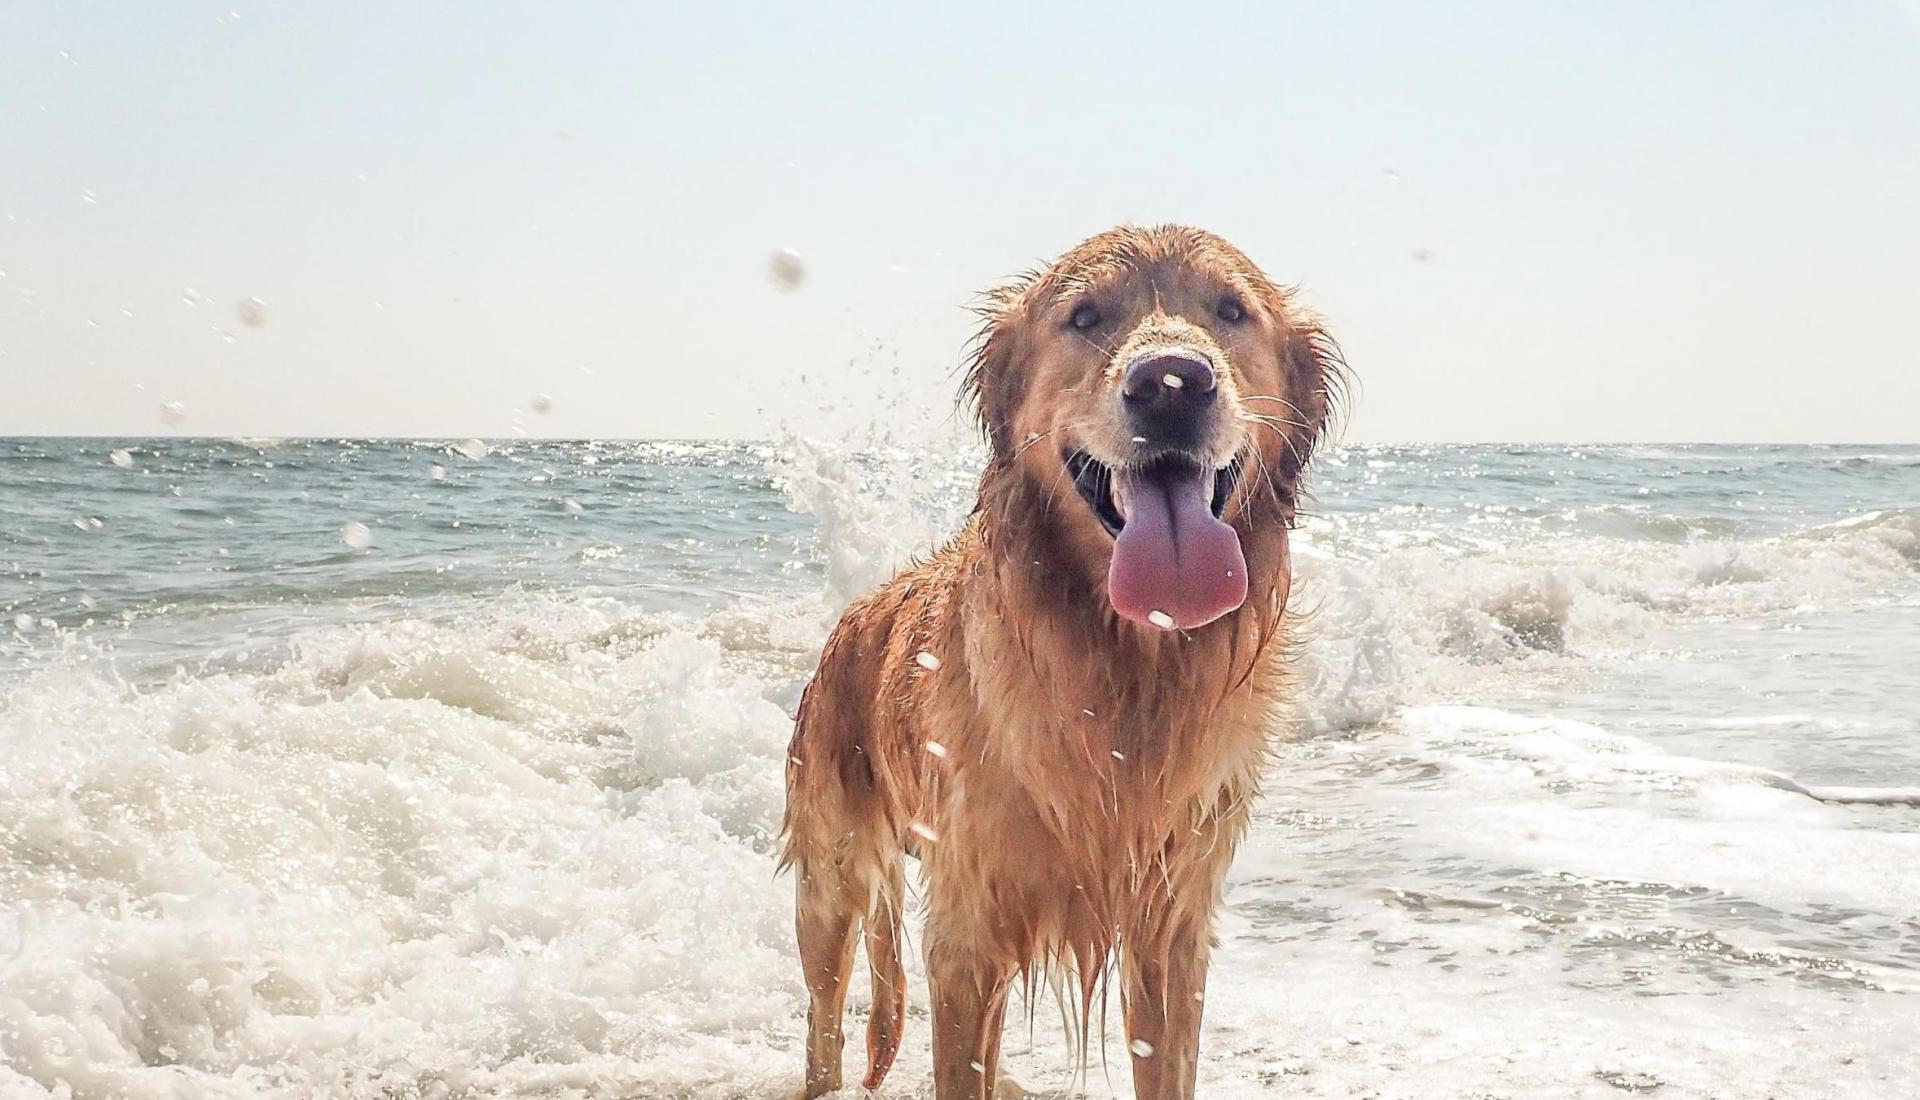 Dog friendly beaches in Europe